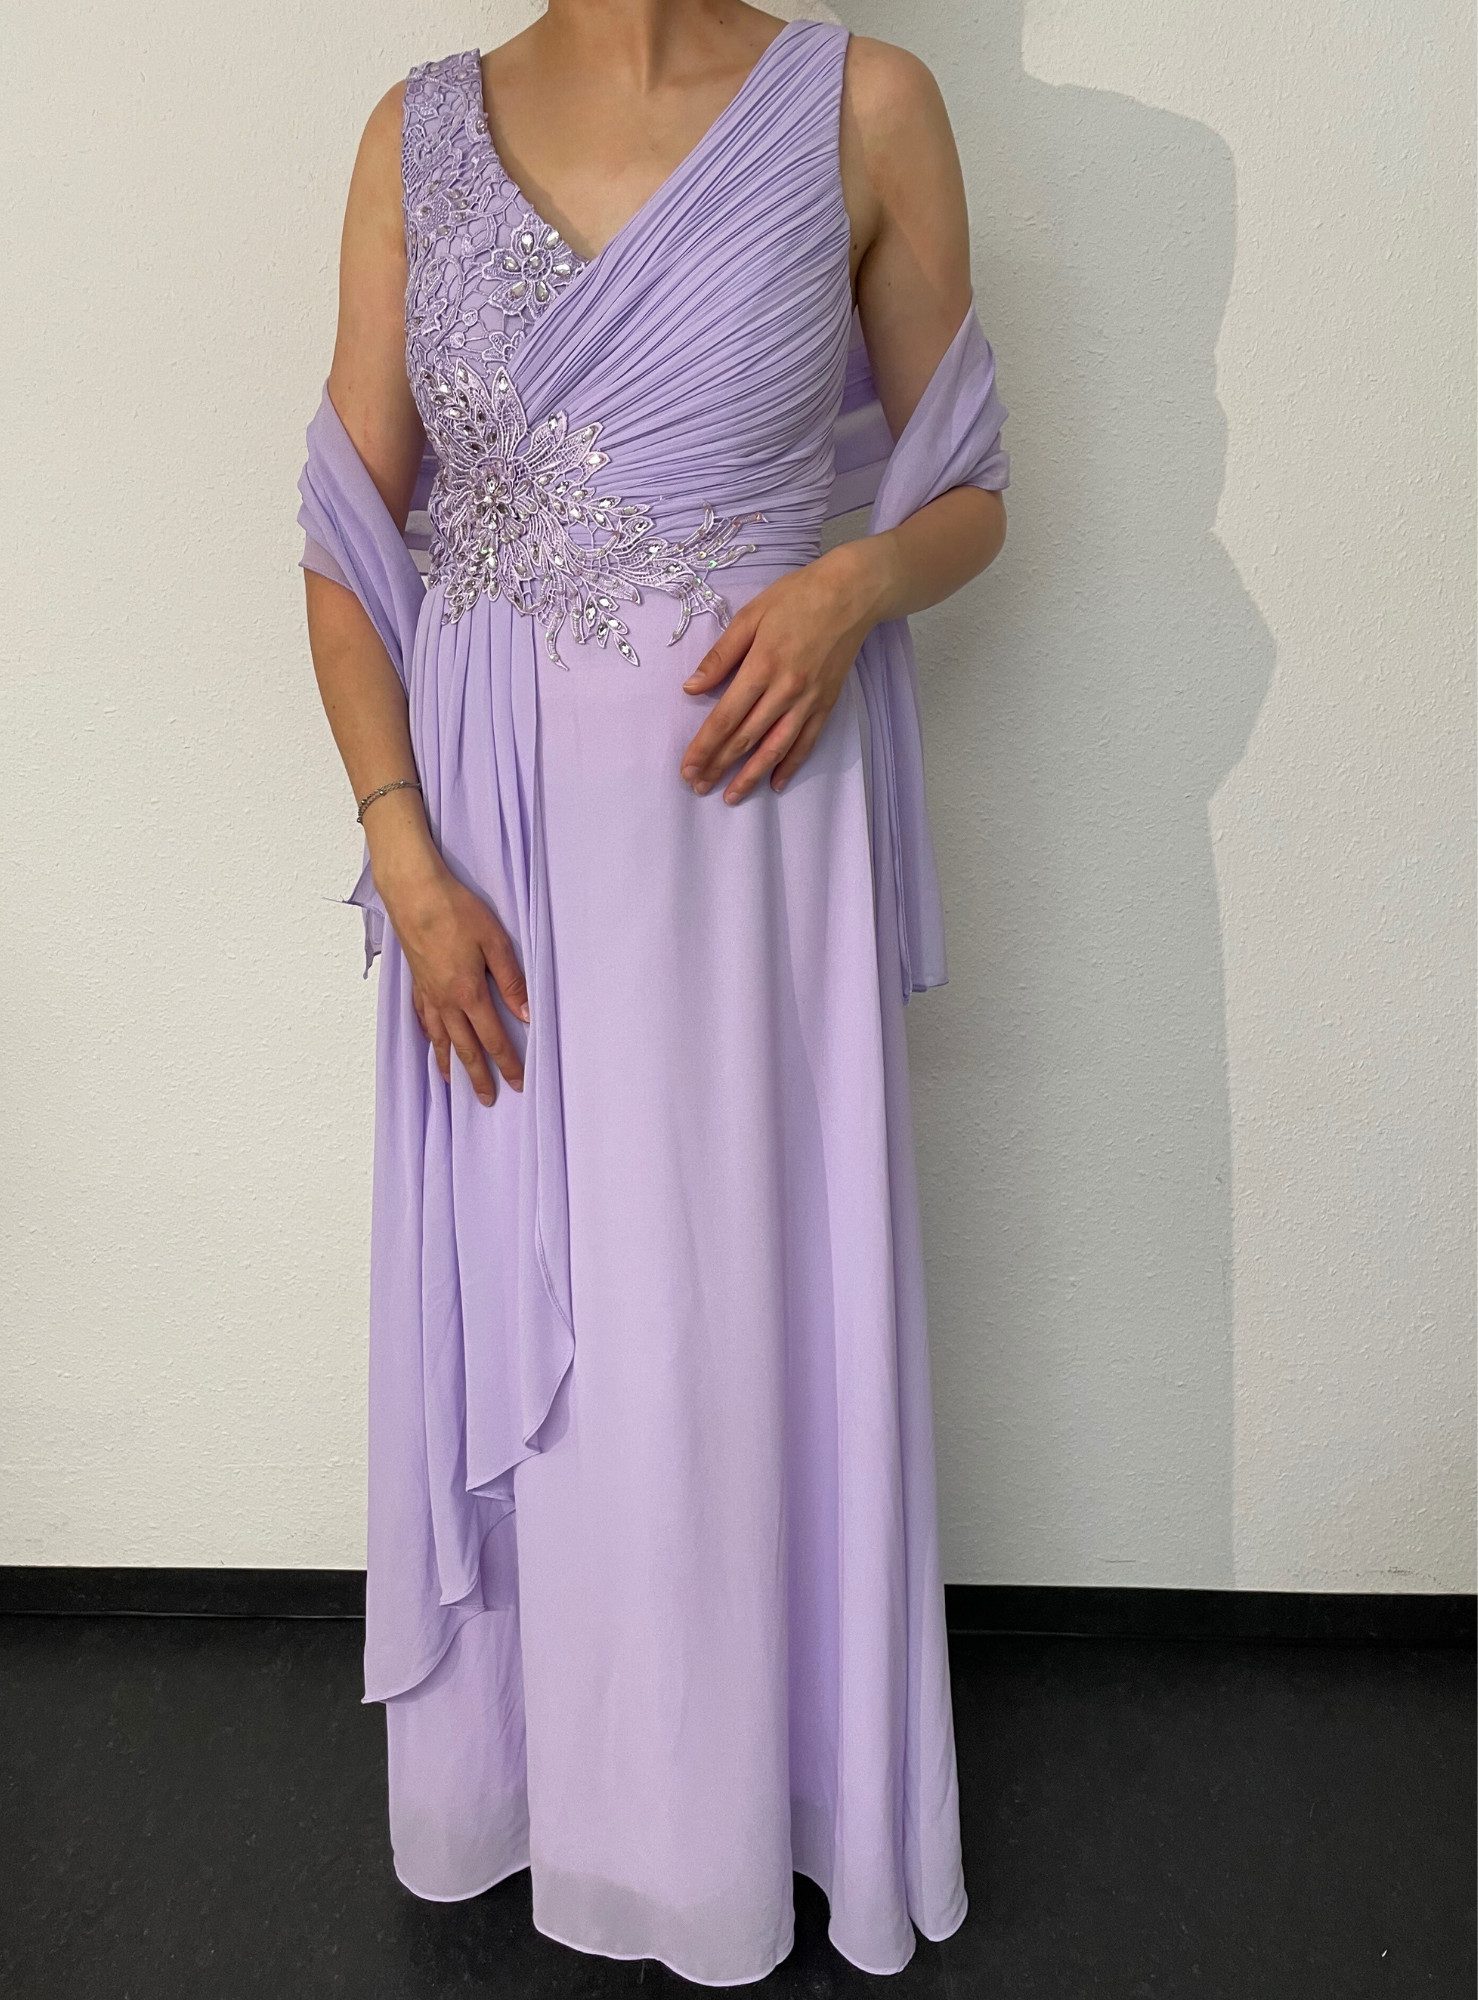 ITALY VIBES Maxikleid - Abendkleid TEODORA - Kleid mit Strass - Stola